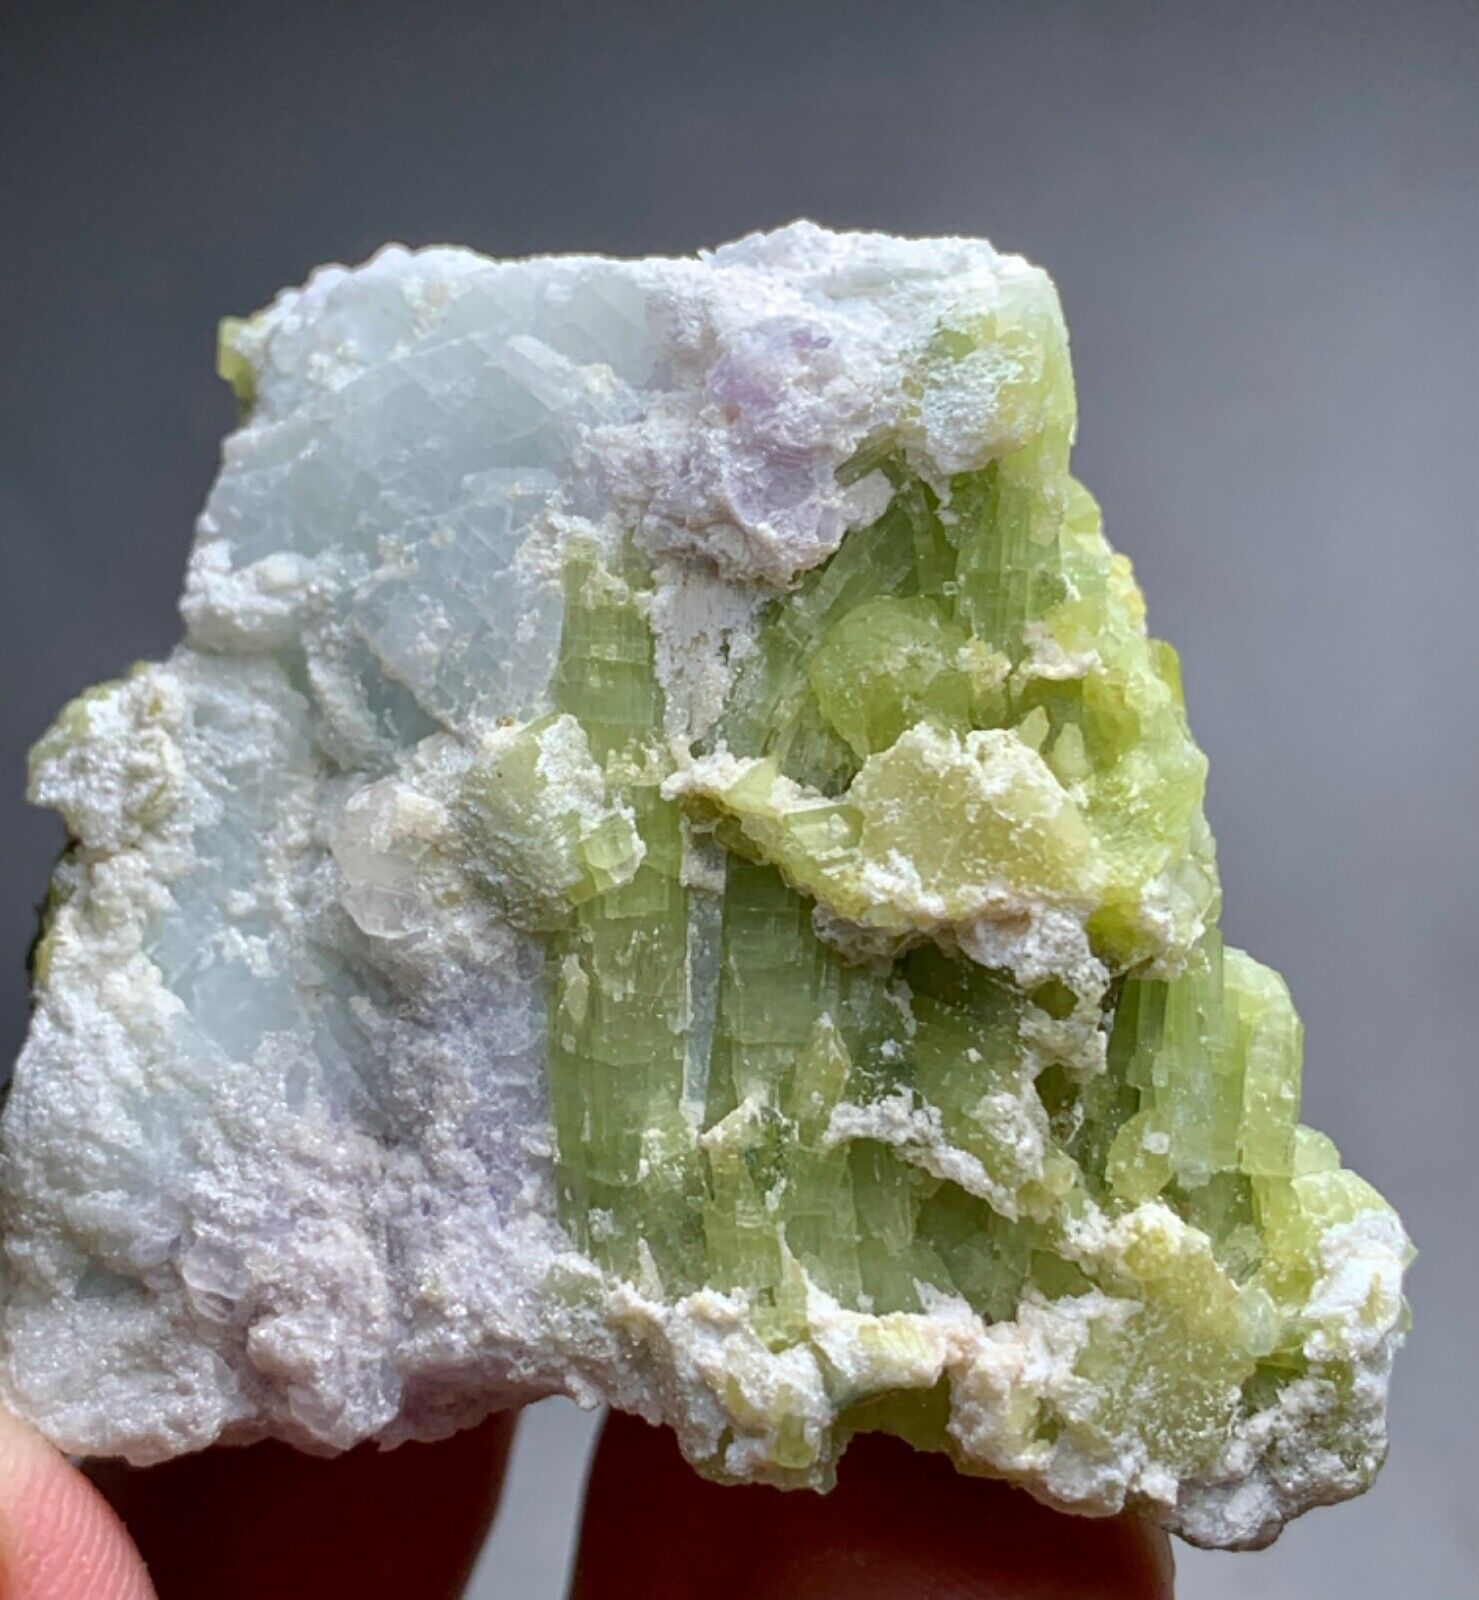 483 Carat Amazing Tourmaline Crystal Bunch Specimen from Afghanistan